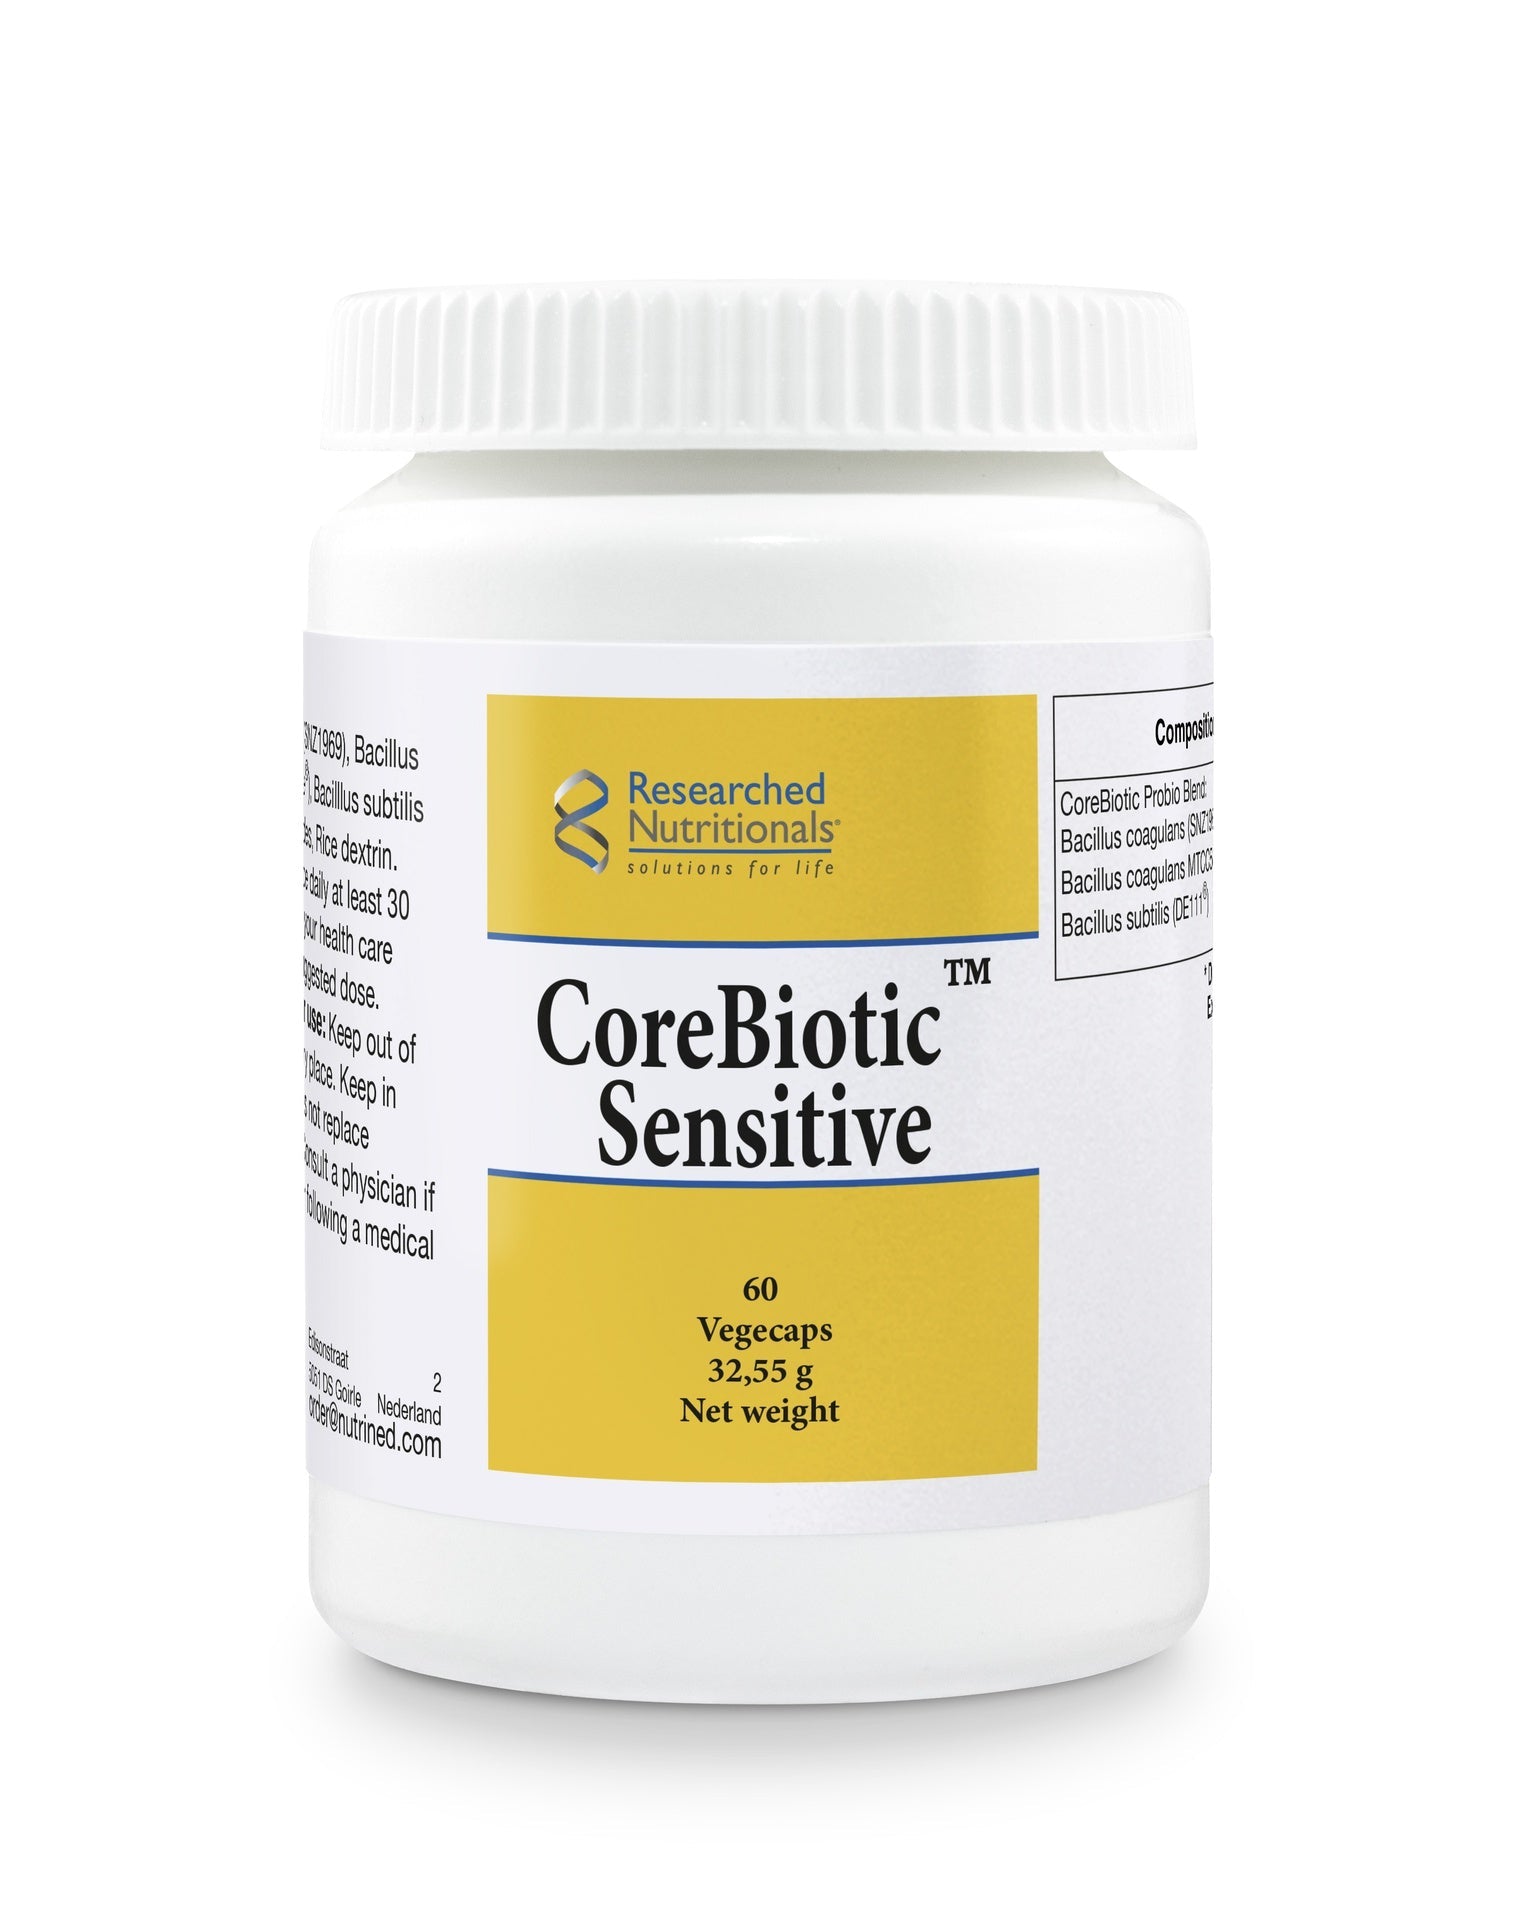 Corebiotic Sensitive (SIBO Compliant) - 60 Capsules | Researched Nutritionals